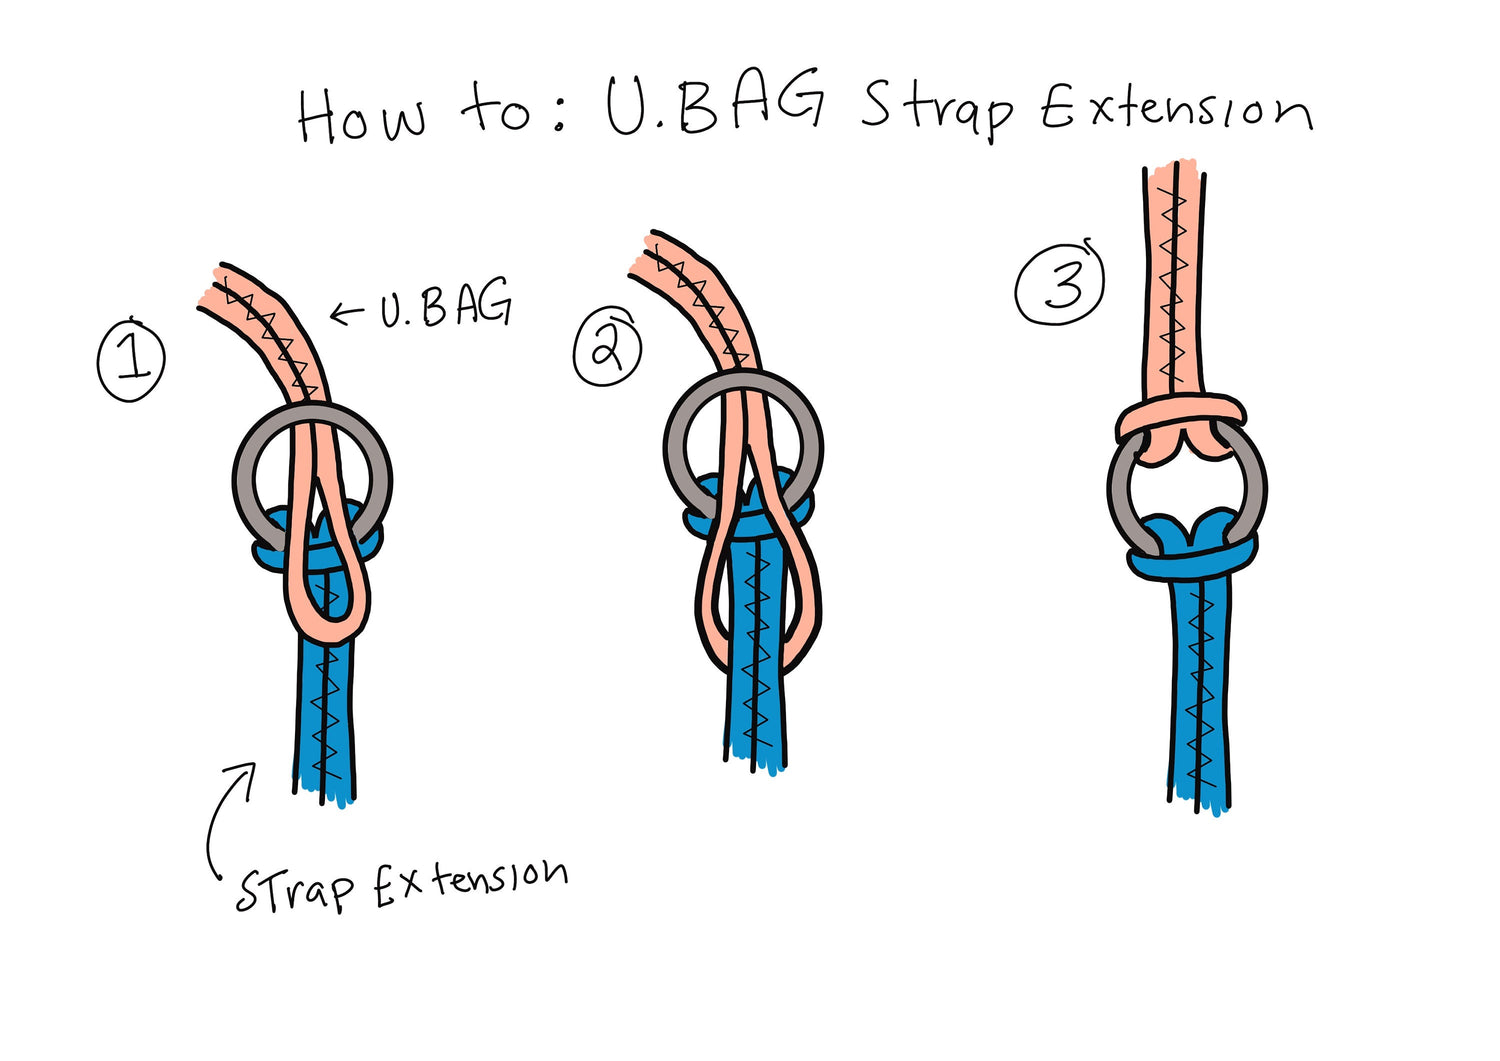 Illustration of U.BAG strap extension instructions.